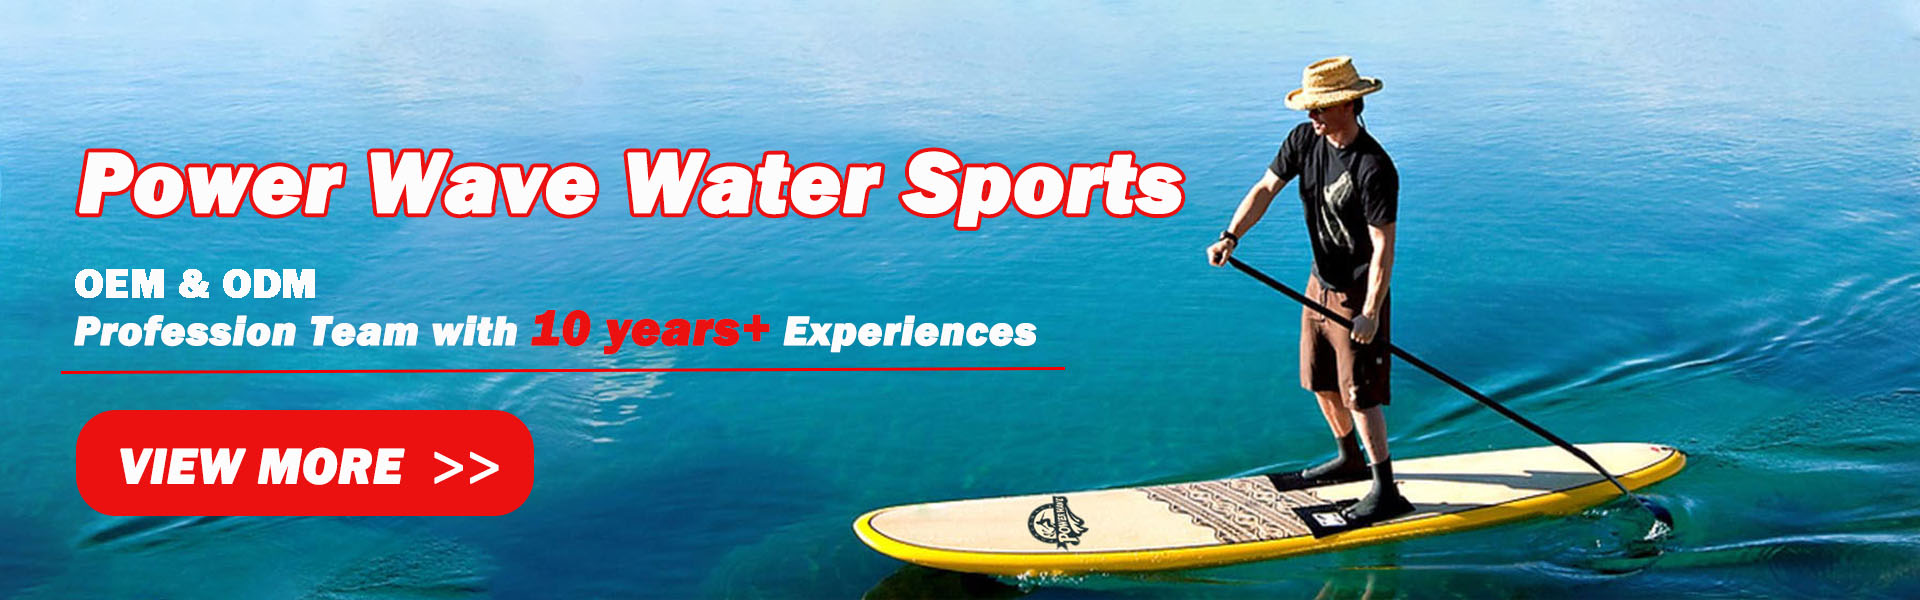 tavola da surf, tavola morbida, sup,Power Wave Water Sports co.Ltd